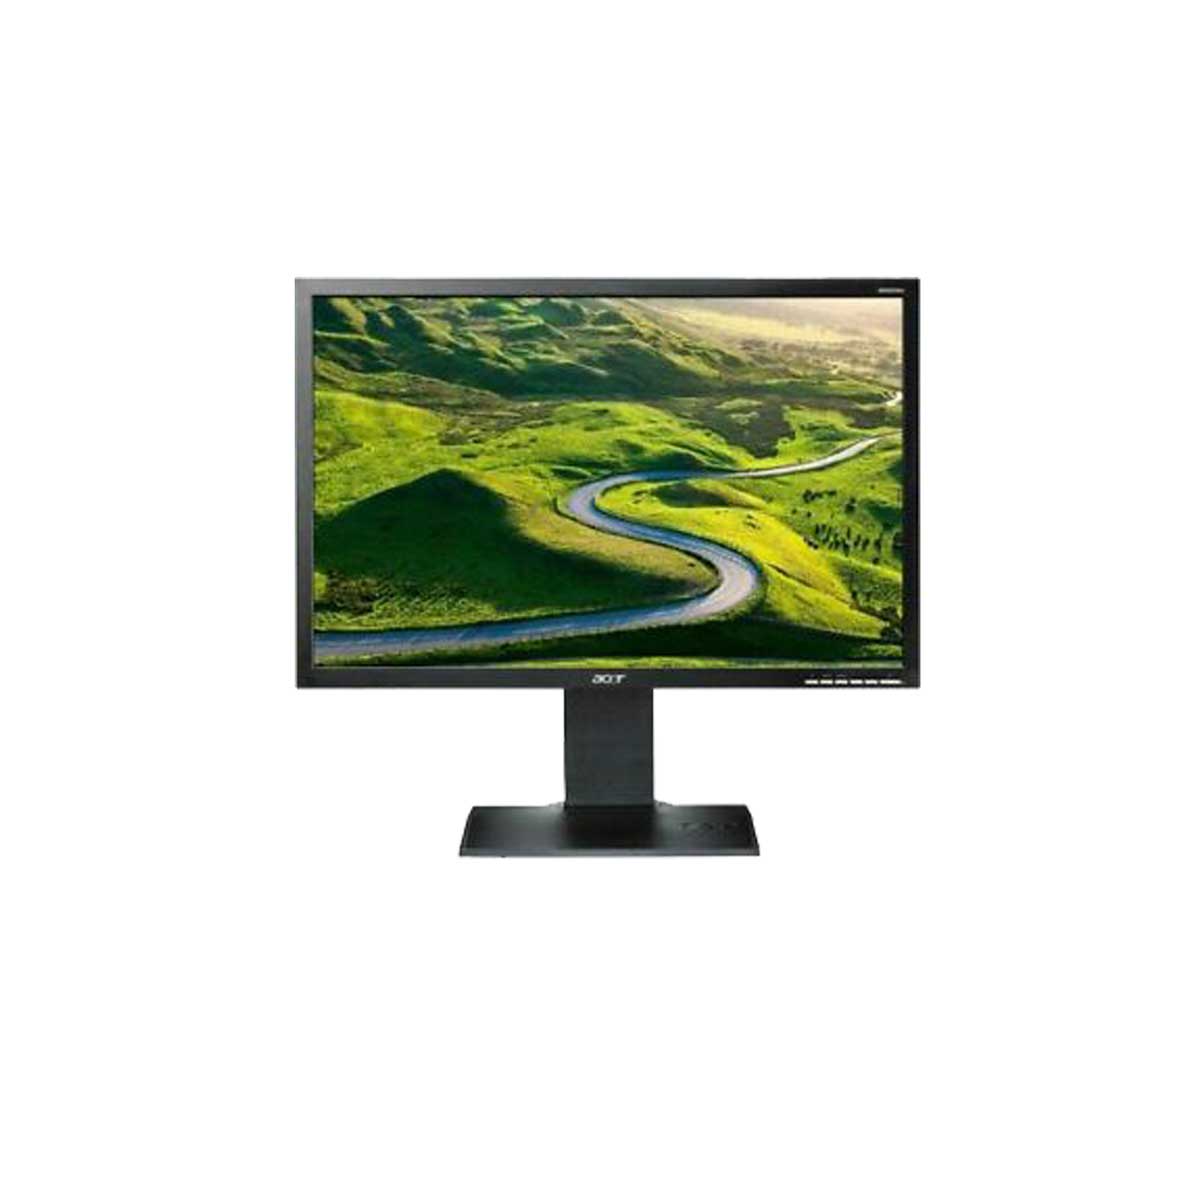 Acer B223WL 22 LED LCD Monitor - TechnoPartners